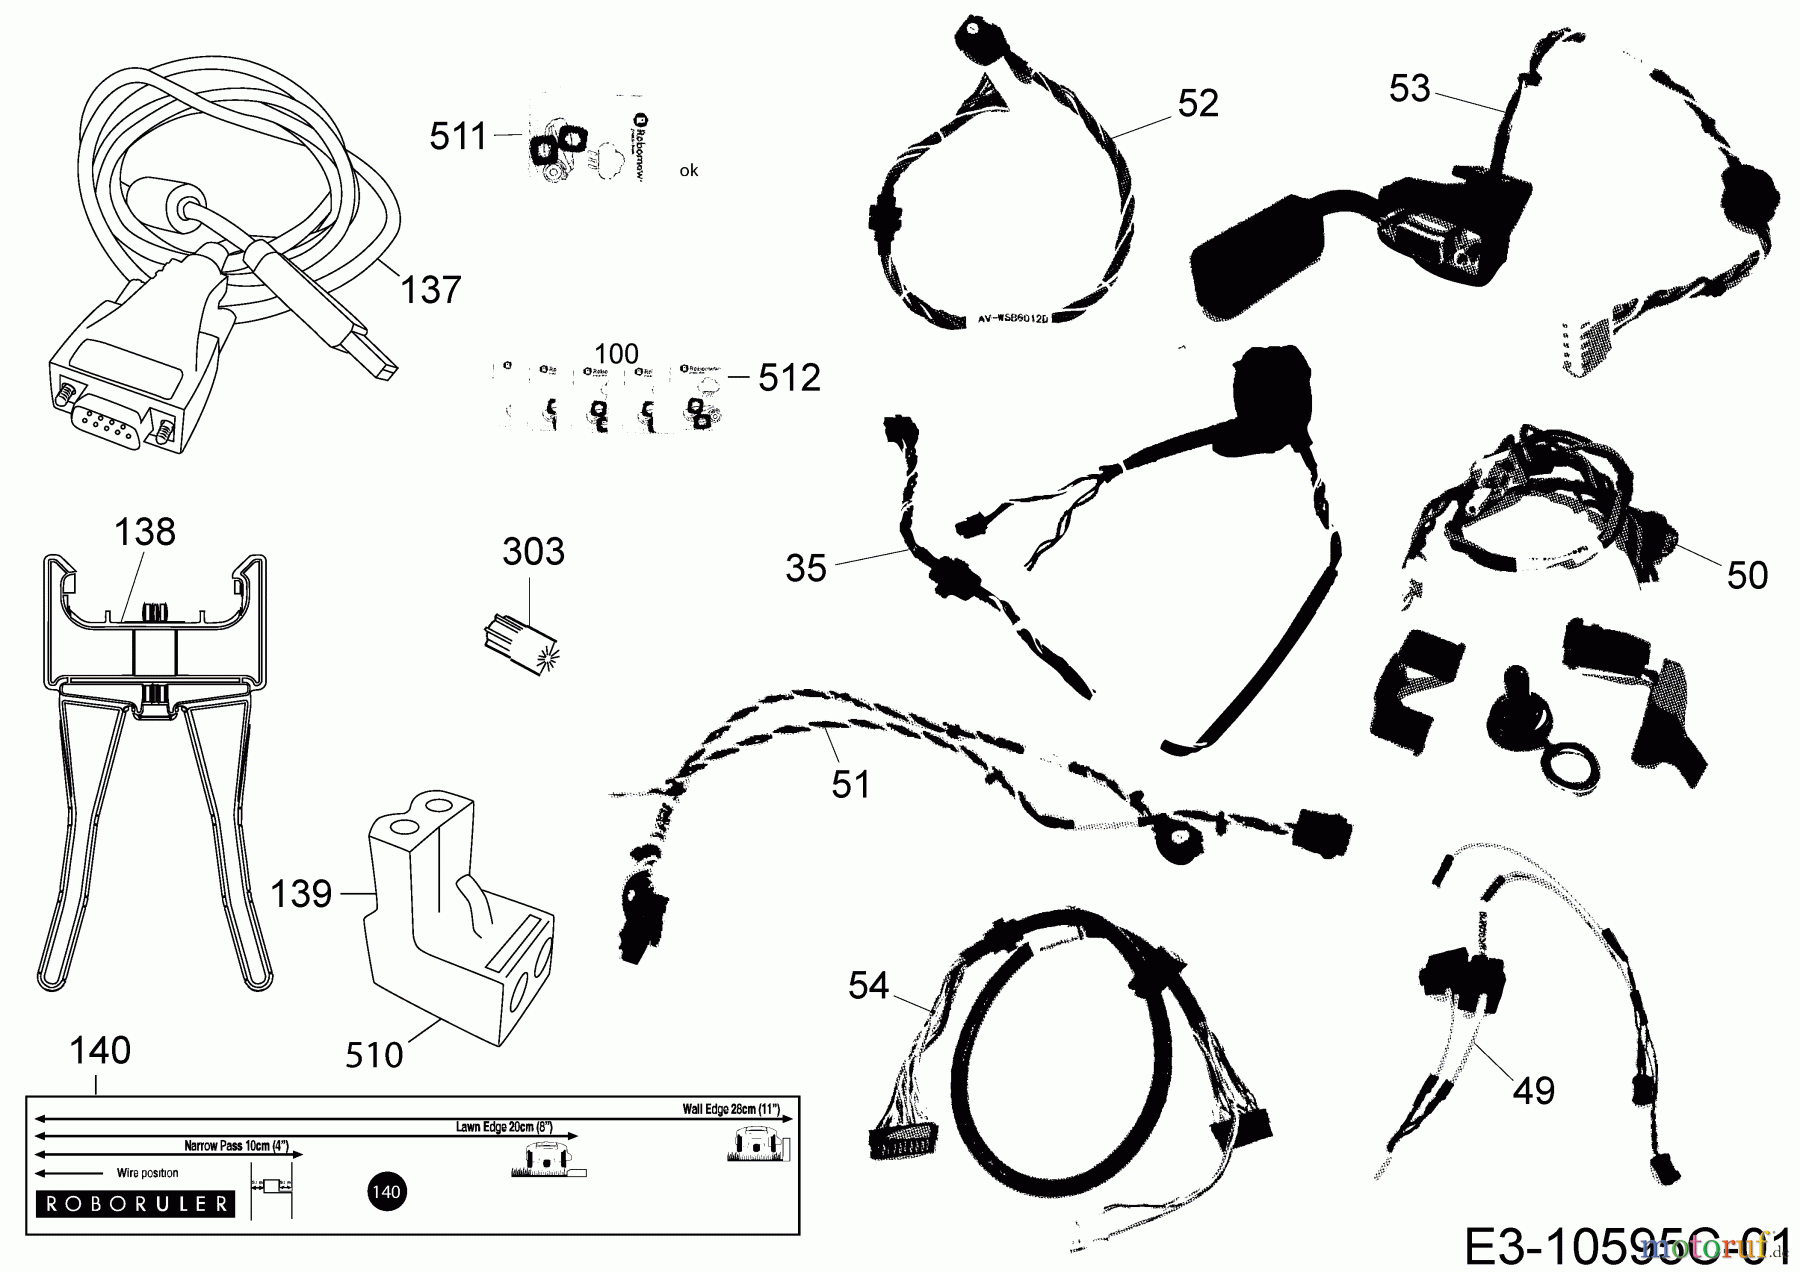  Robomow Mähroboter MS 1800 PRD6200Y1  (2015) Kabel, Kabelanschluß, Regensensor, Werkzeug